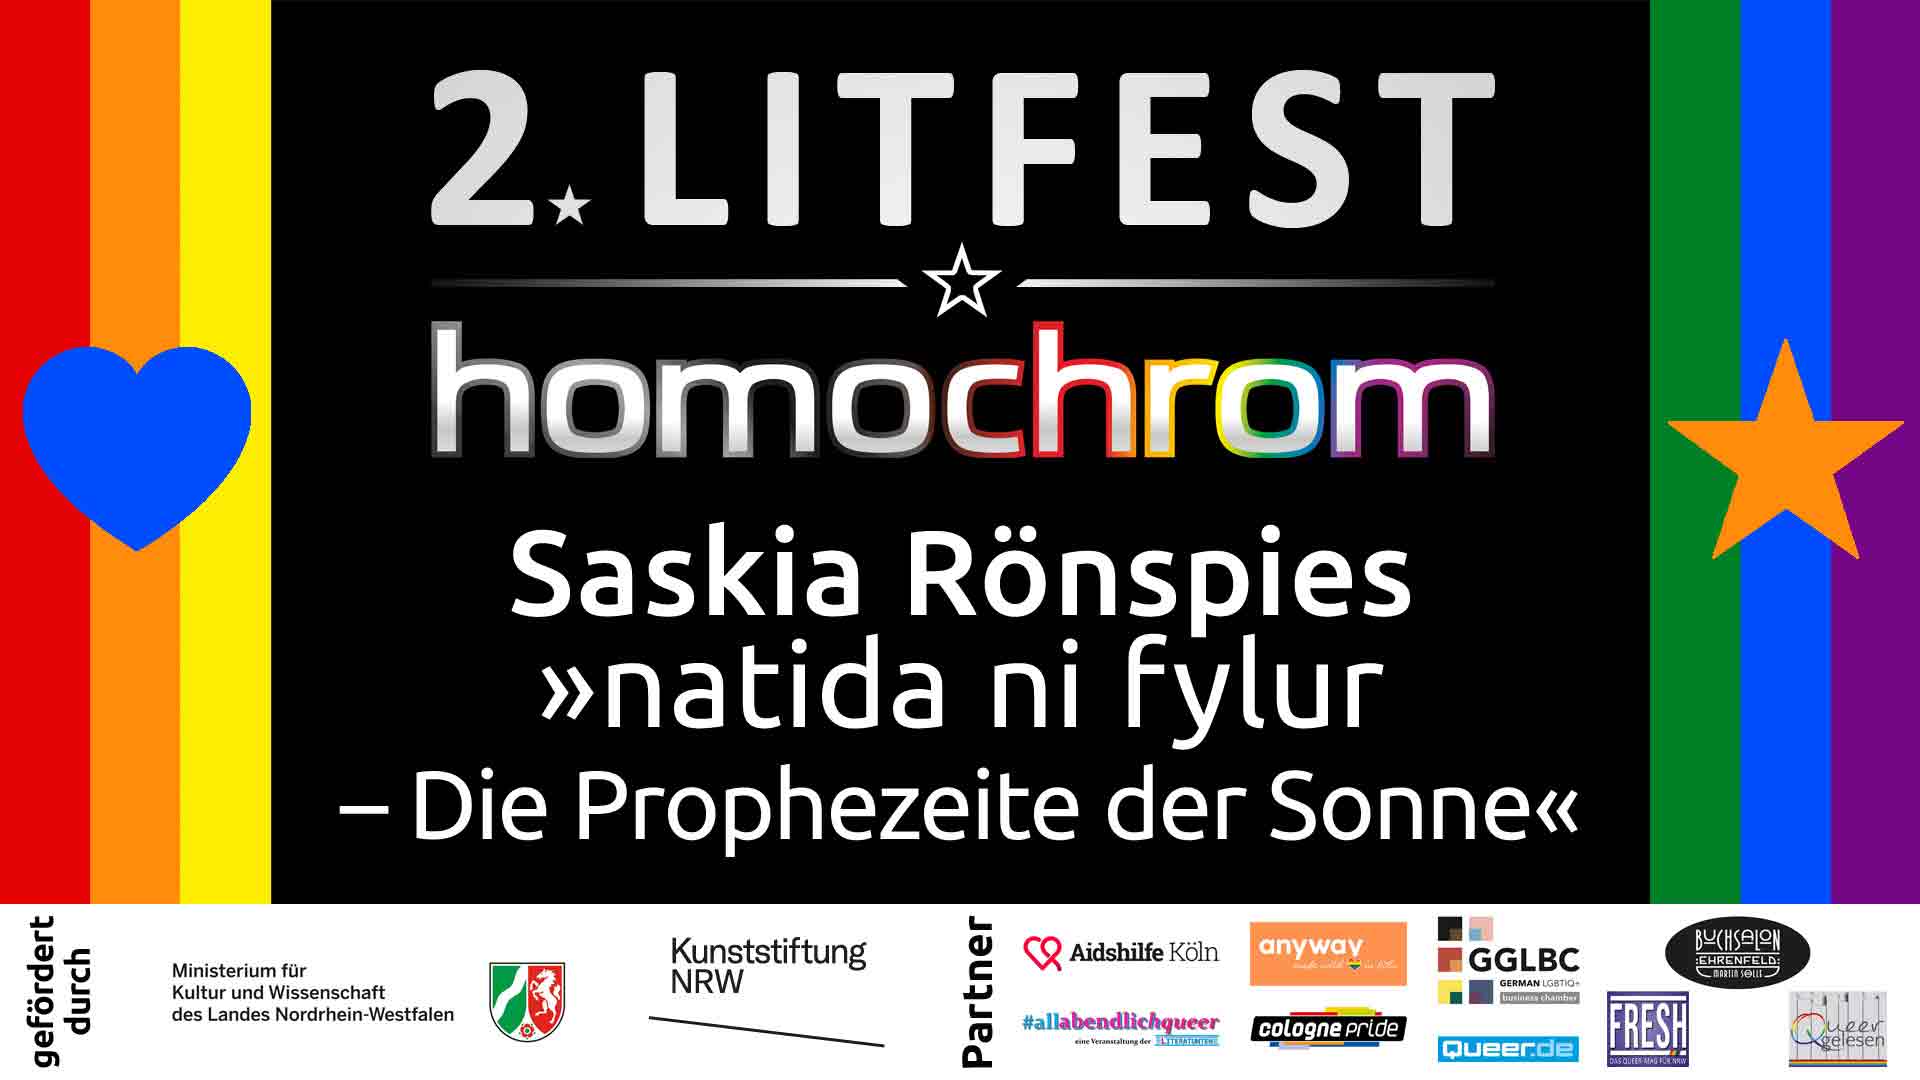 Youtube Video, Saskia Rönspies, 2. Litfest homochrom